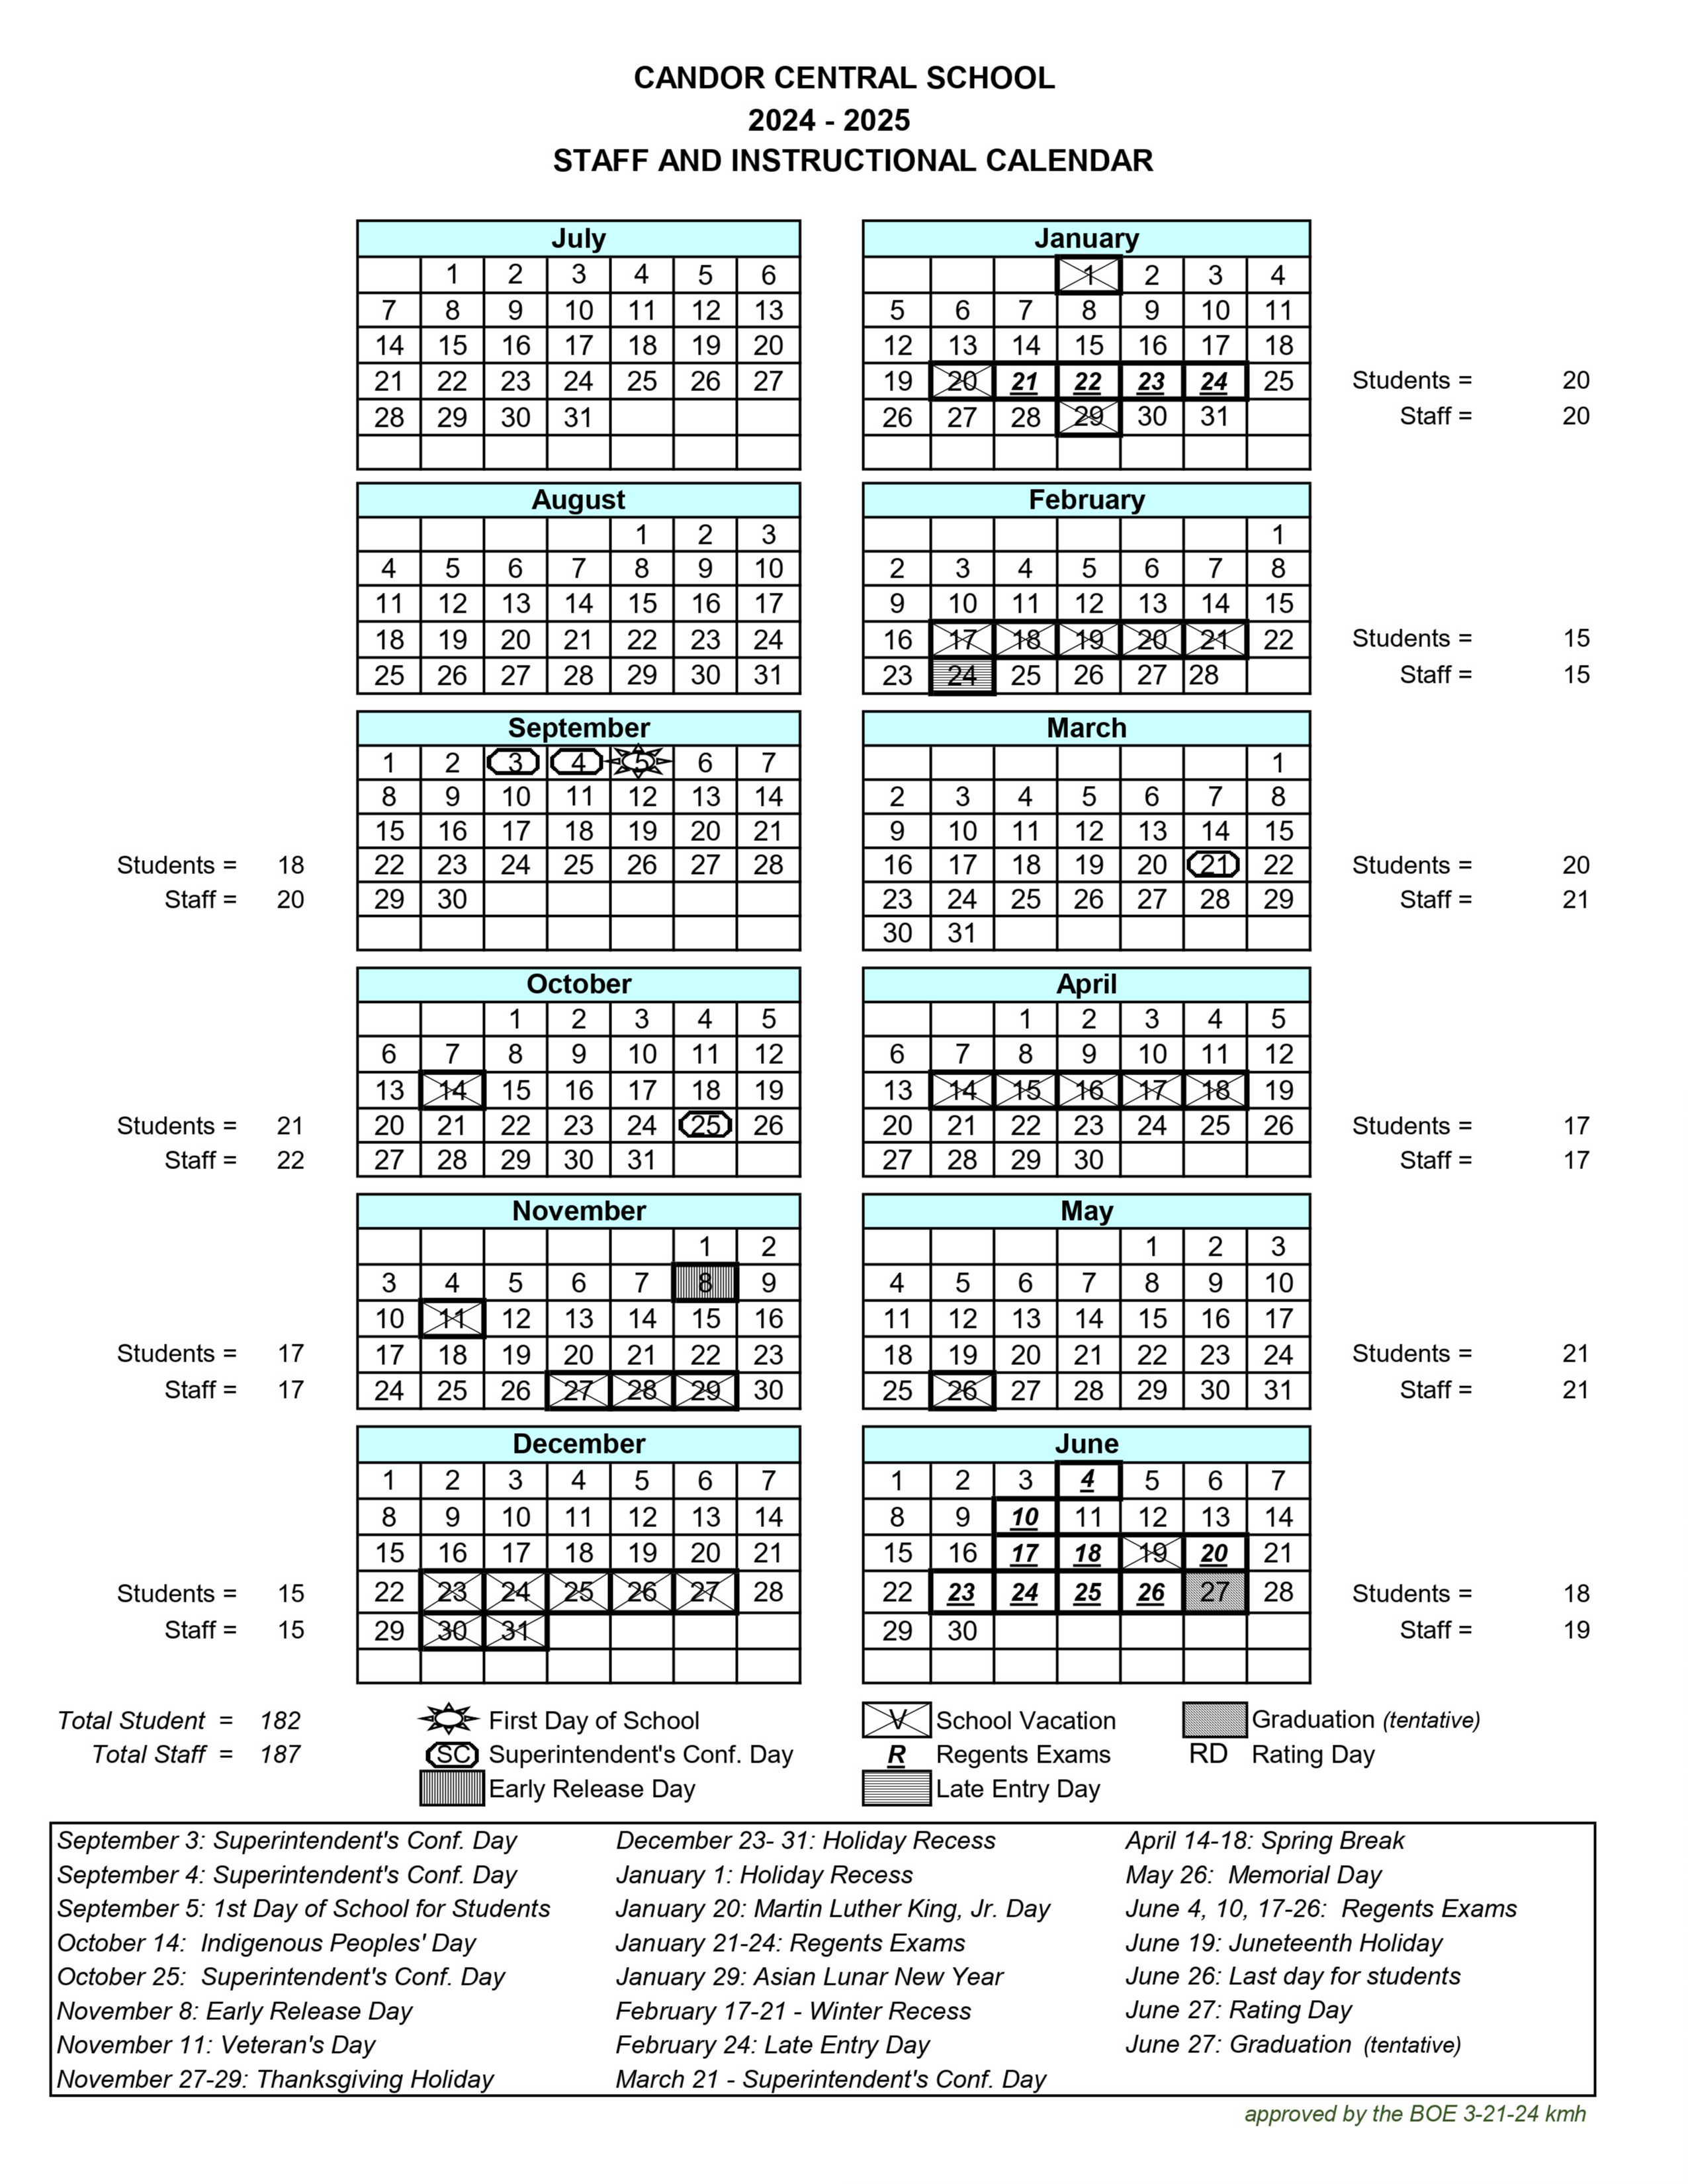 CCSD Instructional Calendar